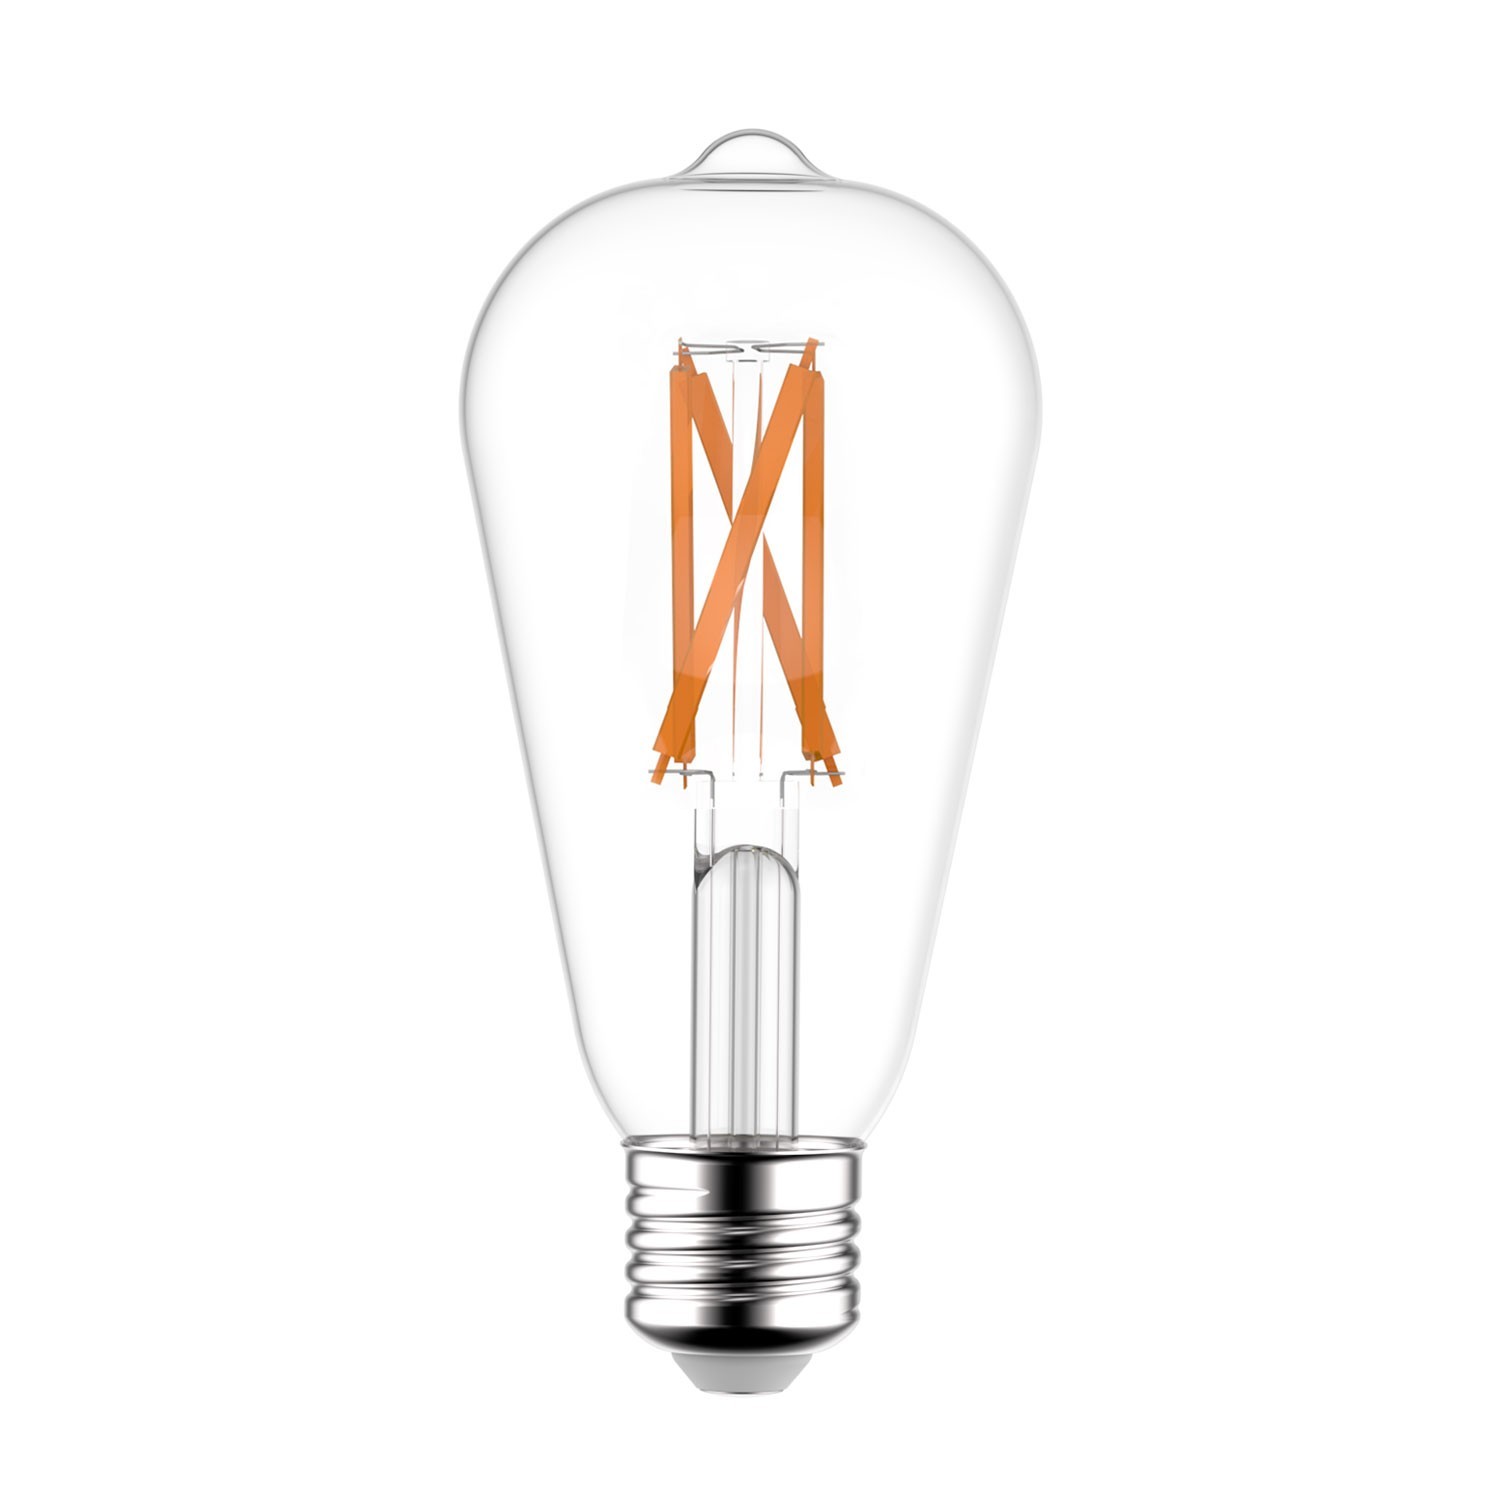 SMART LED Glühlampe Edison ST64 WI-FI transparent mit Filament 6.5W E27 dimmbar